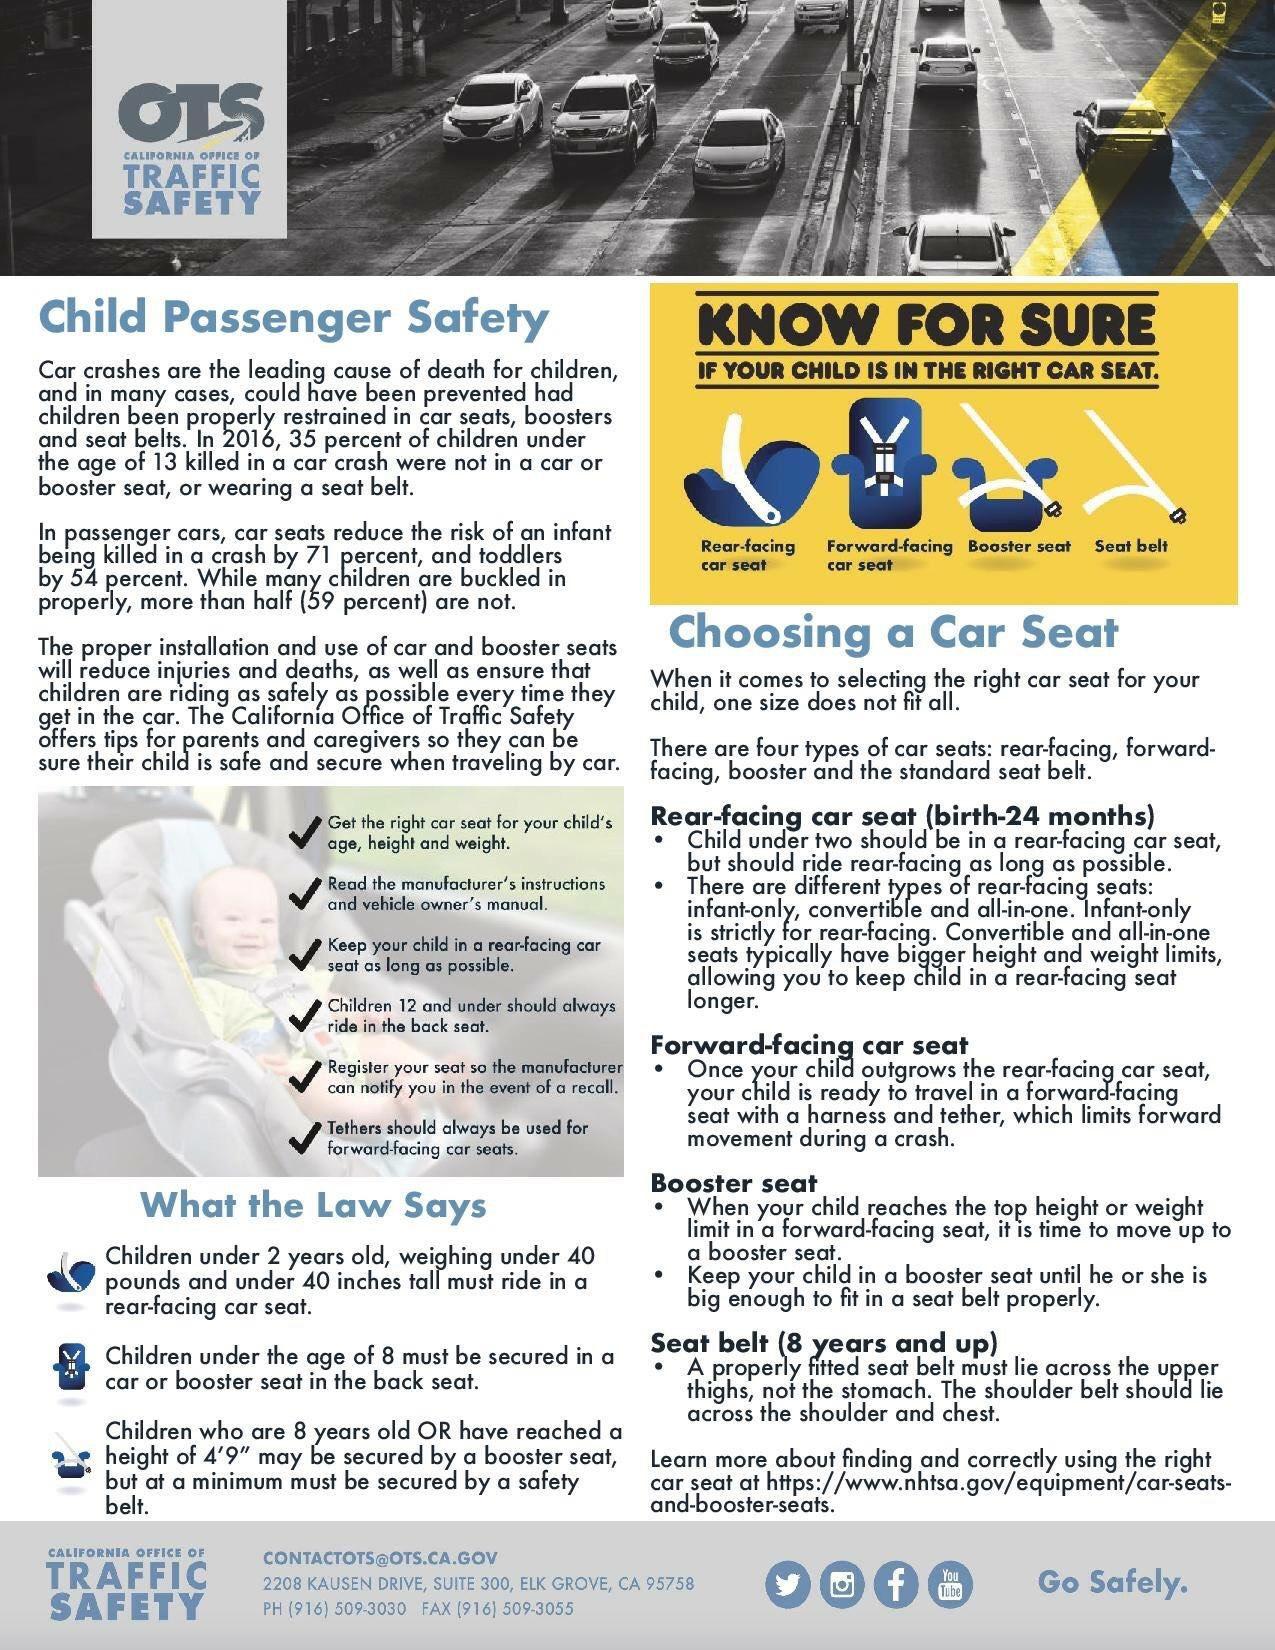 Child passenger safety flyer